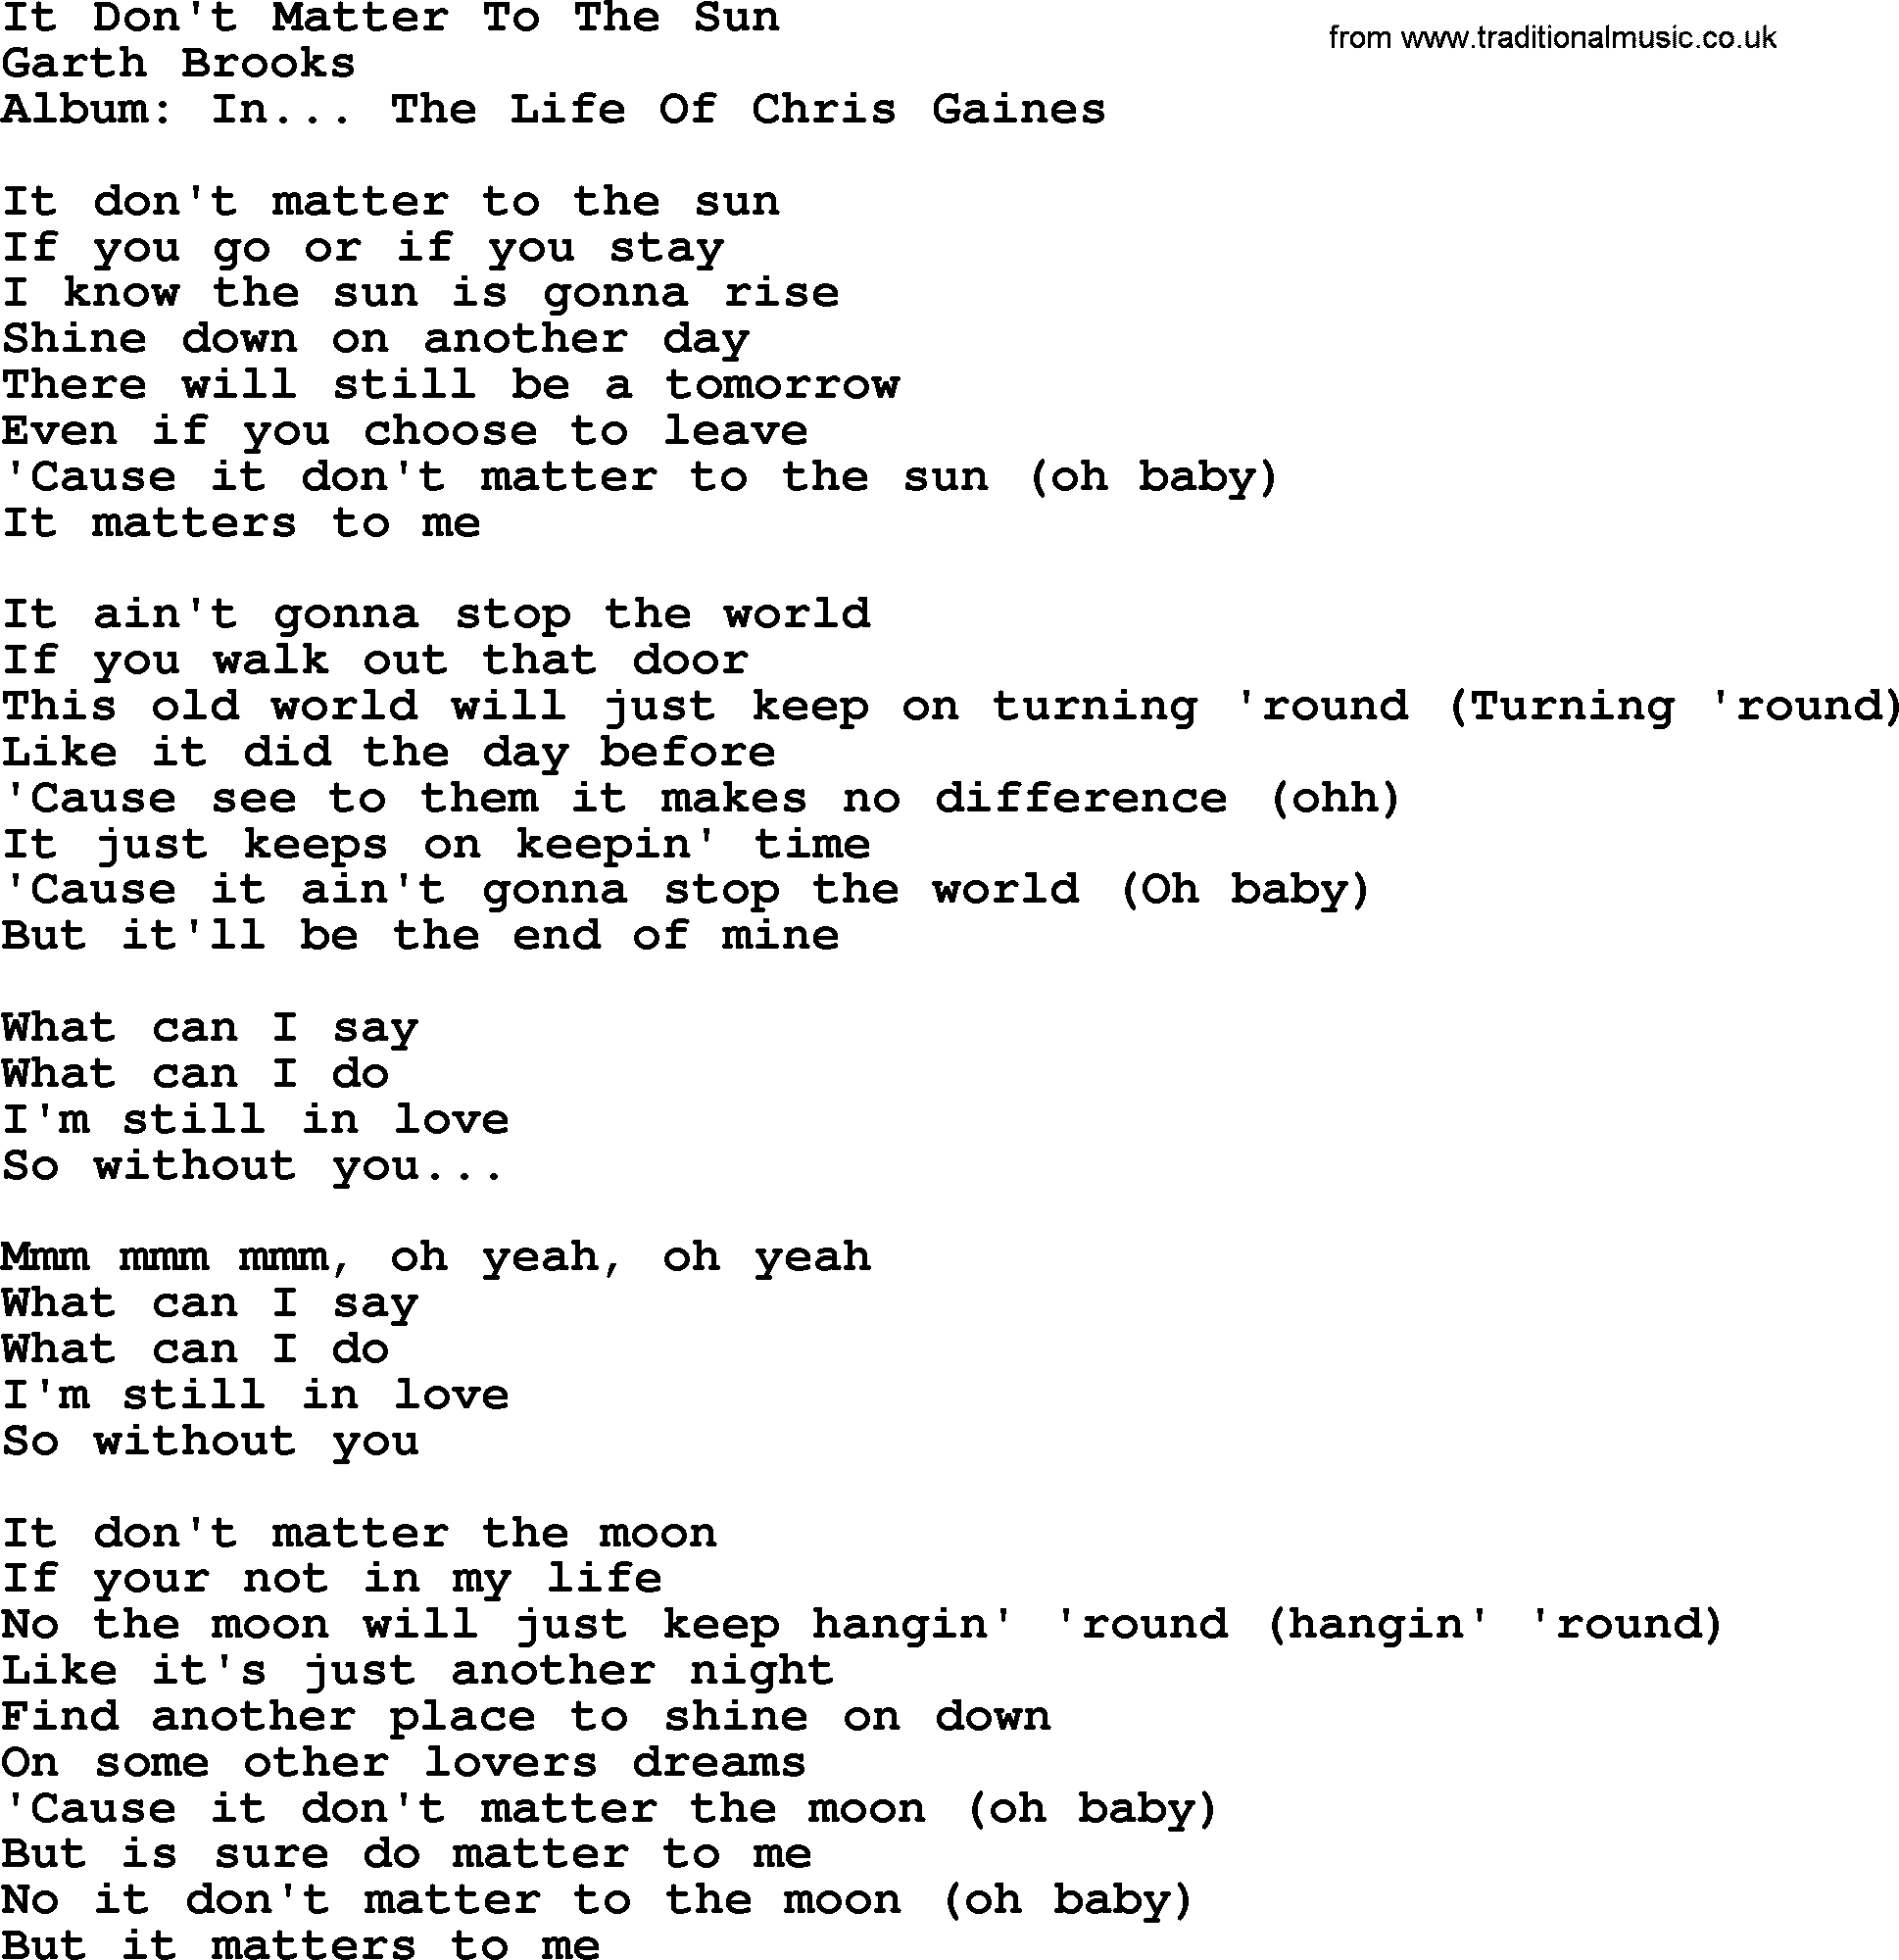 Garth Brooks song: It Don't Matter To The Sun, lyrics